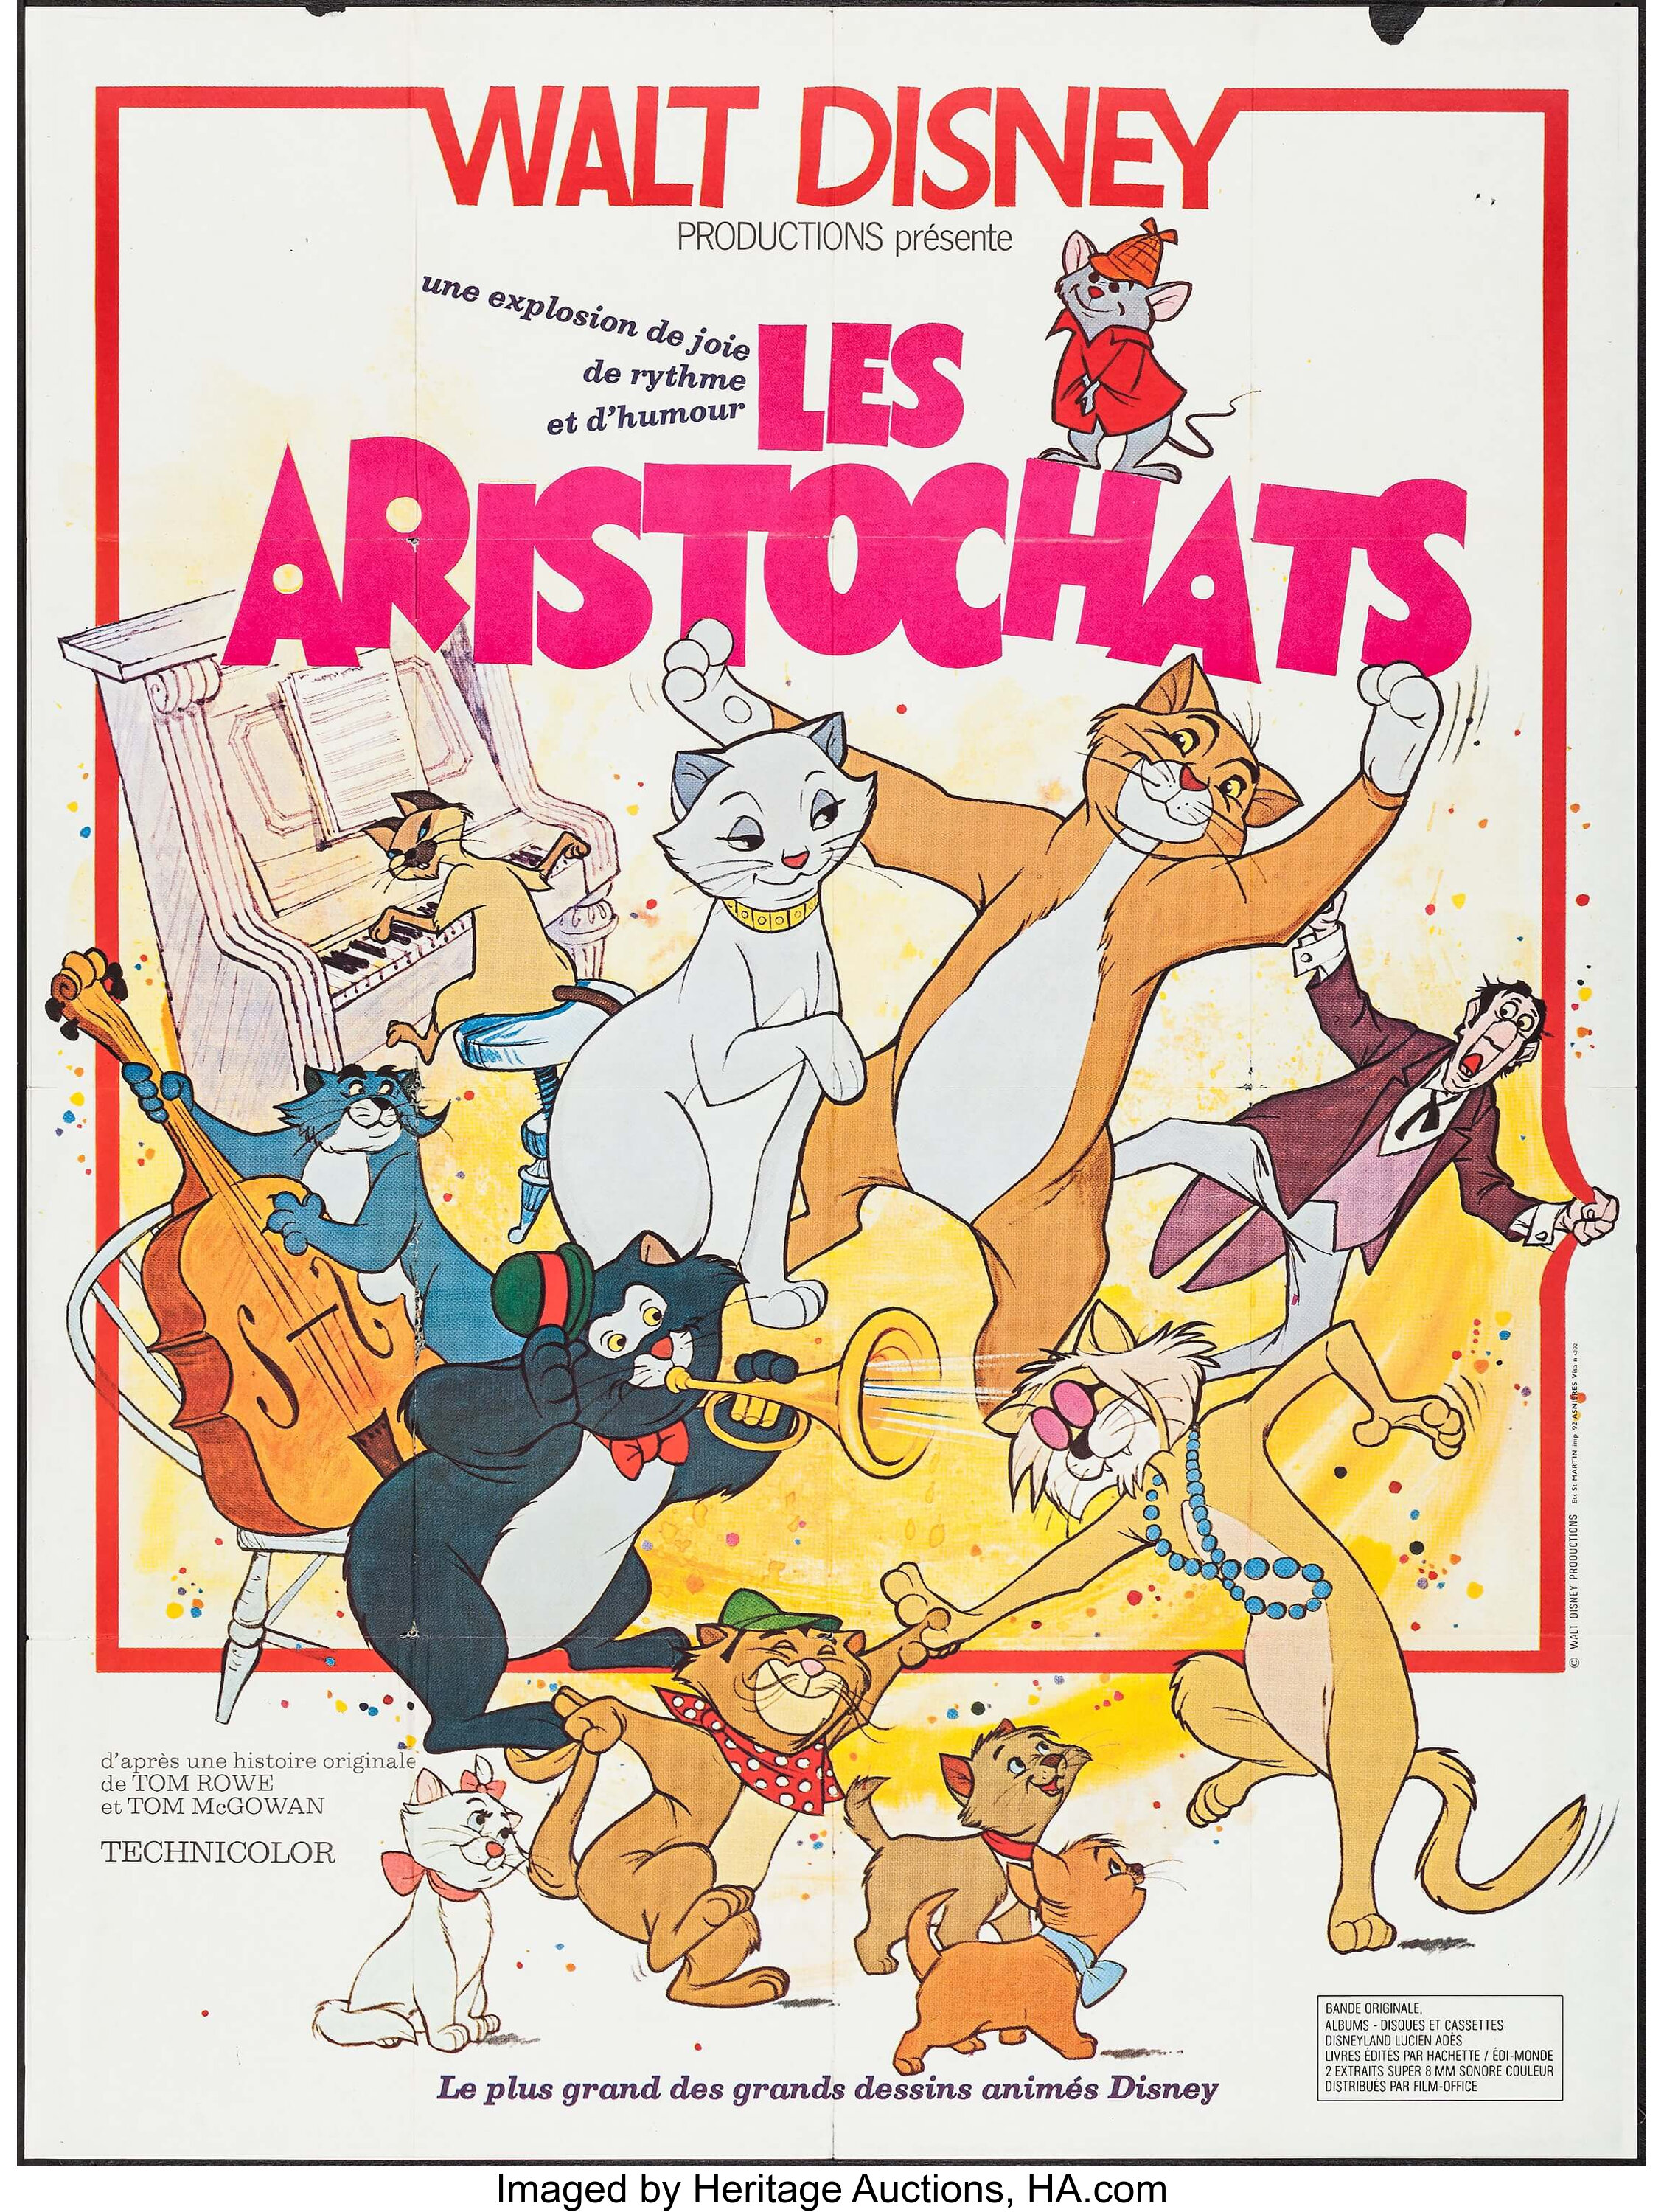 1970 The Aristocats